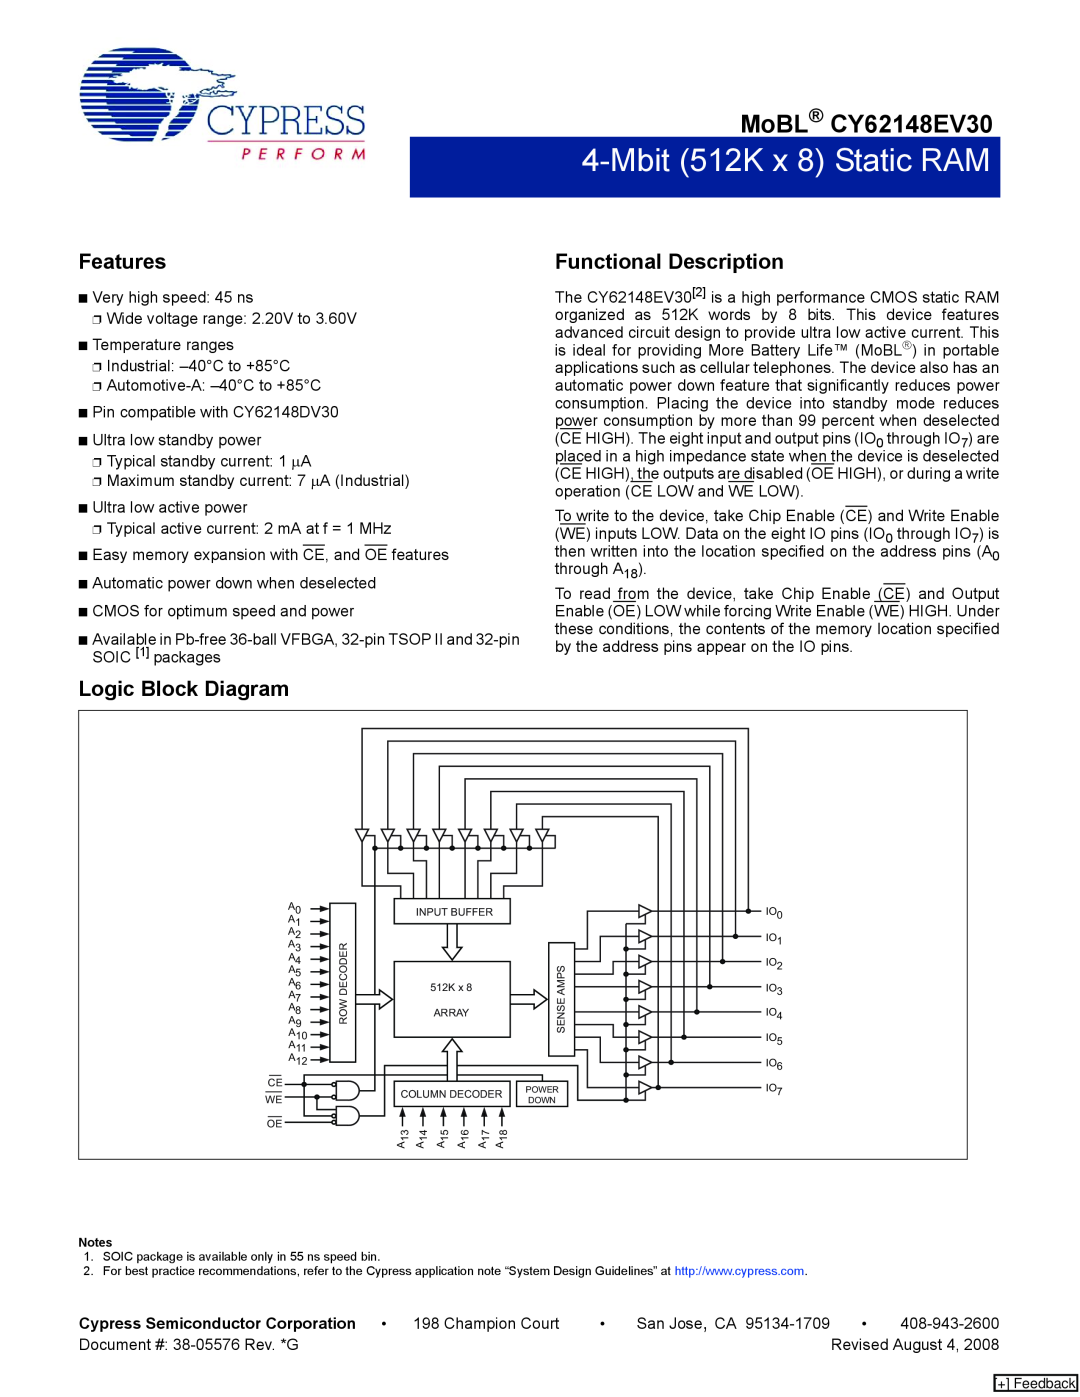 Cypress manual MoBL CY62148EV30, Features, Functional Description, Logic Block Diagram, Mbit 512K x 8 Static RAM 